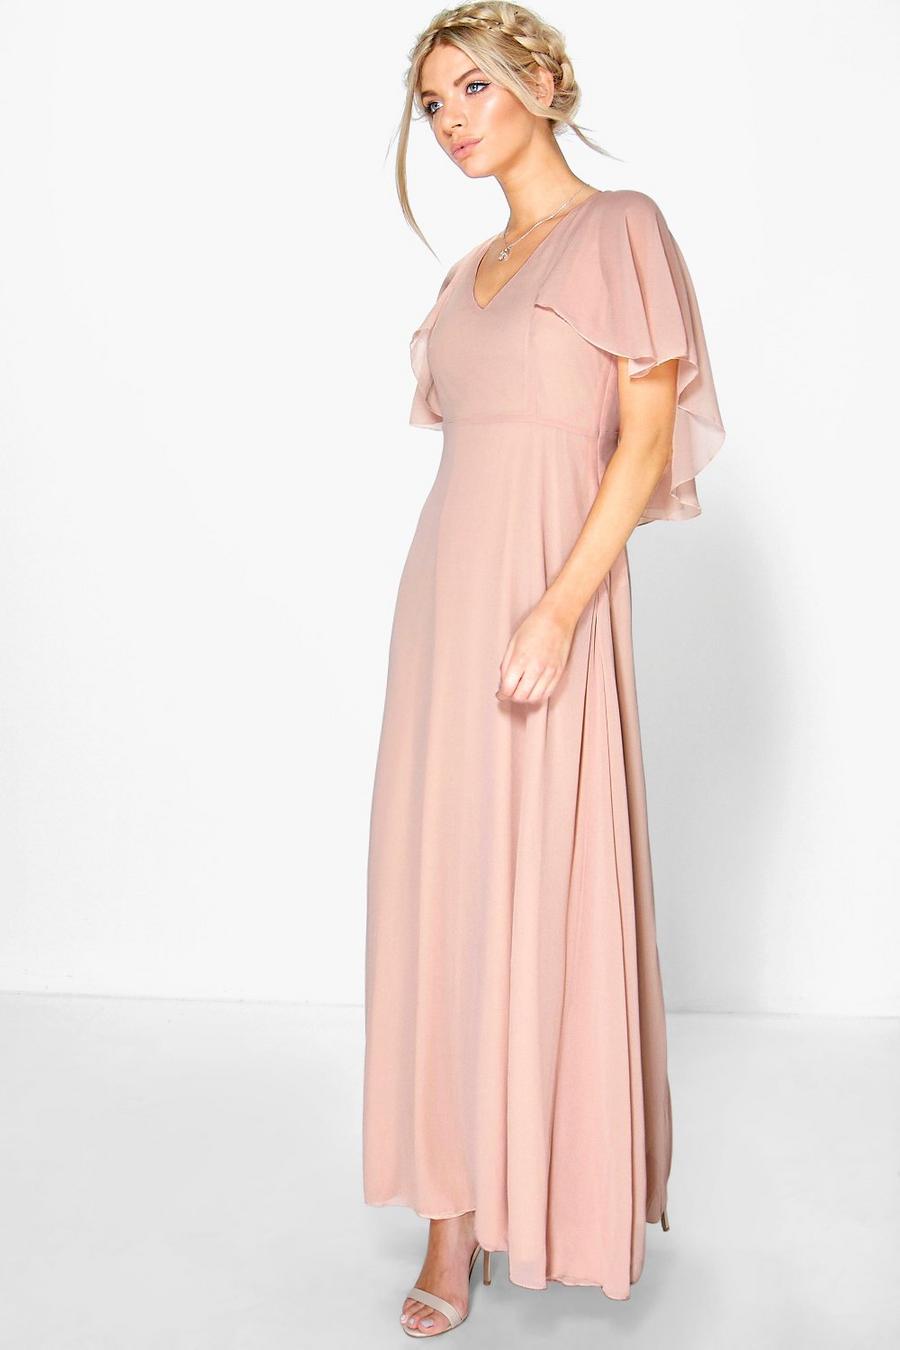 Blush rose Chiffon Cape Sleeve Maxi Bridesmaid Dress